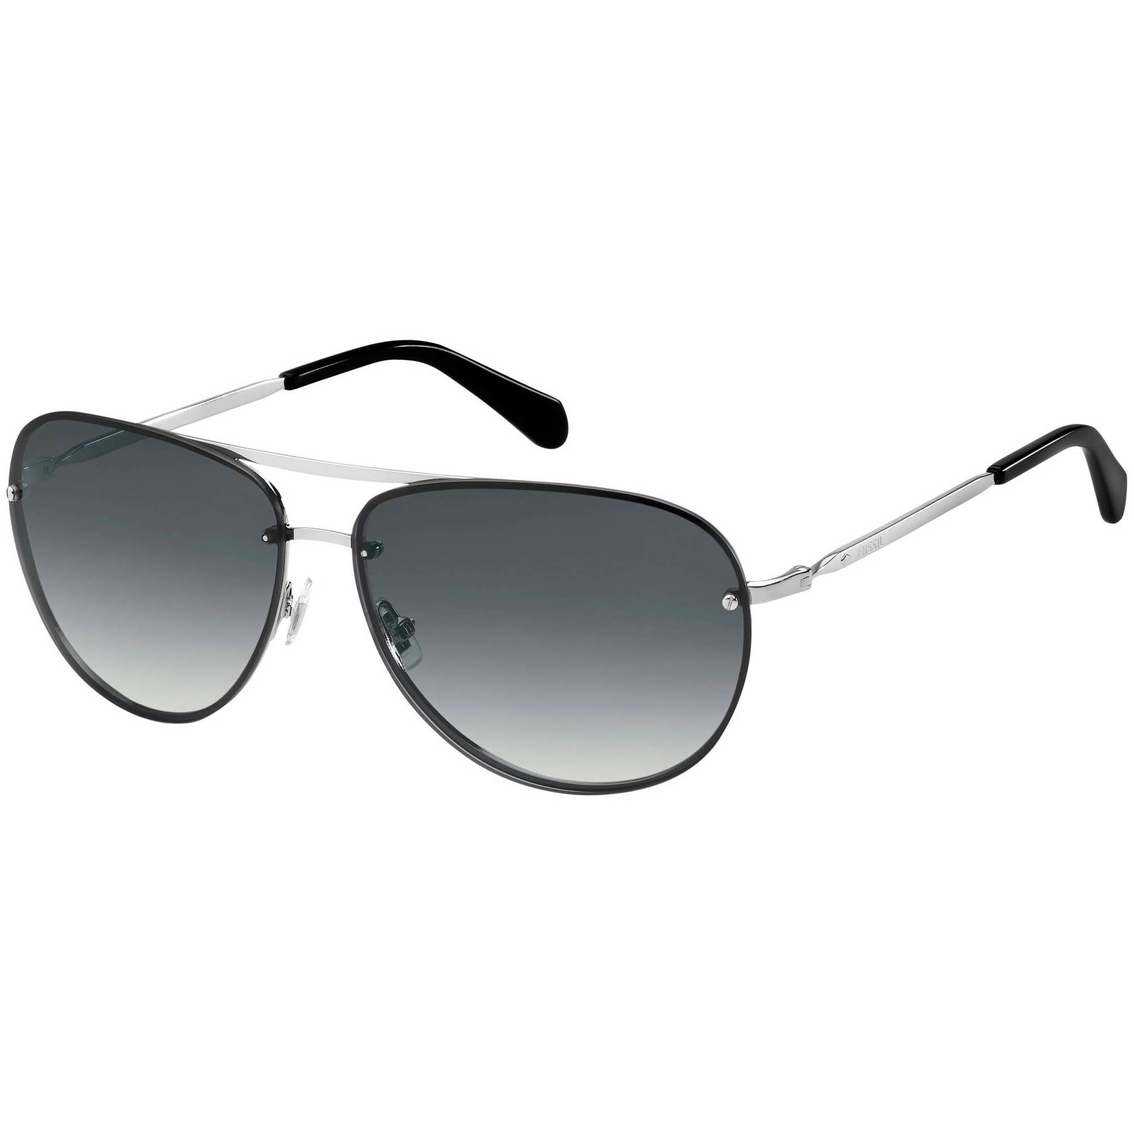 Fossil Eyewear Collection Metal Aviator Sunglasses | Unisex Sunglasses ...